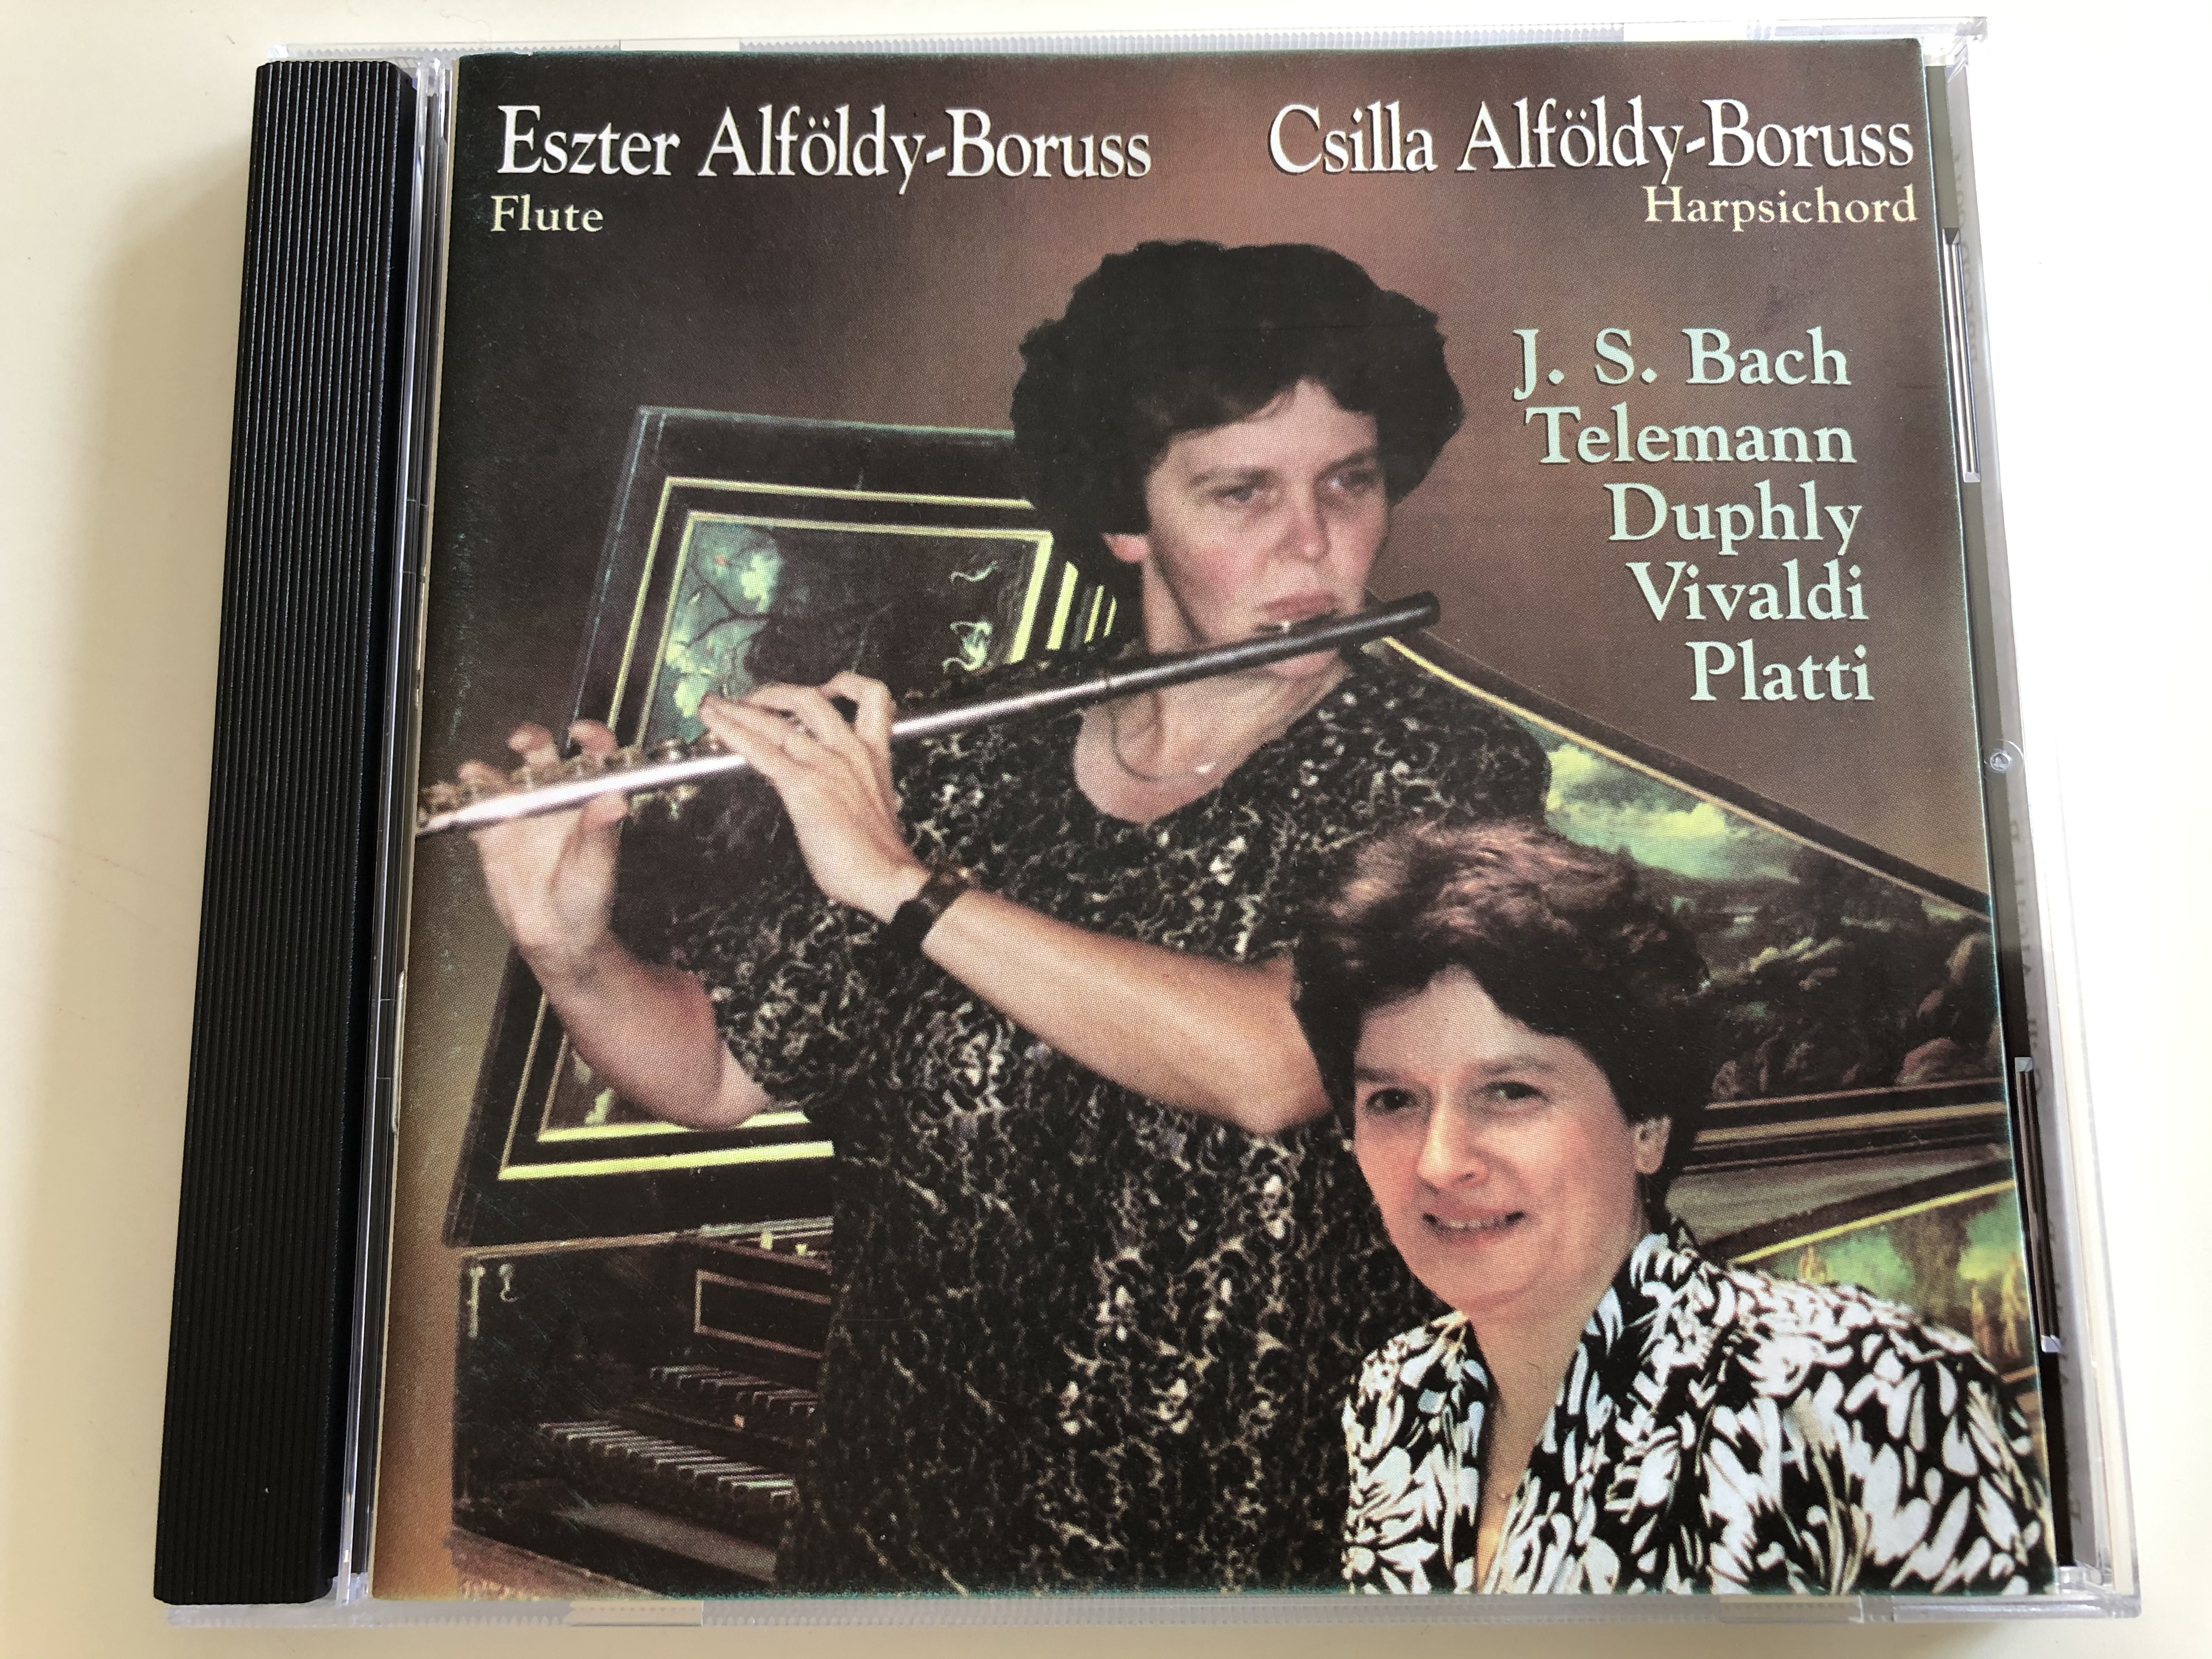 eszter-alf-ldy-boruss-flute-csilla-alf-ldy-boruss-harpsichord-j.-s.-bach-telemann-duphly-vivaldi-platti-preludio-audio-cd-1999-precd-9911-1-.jpg